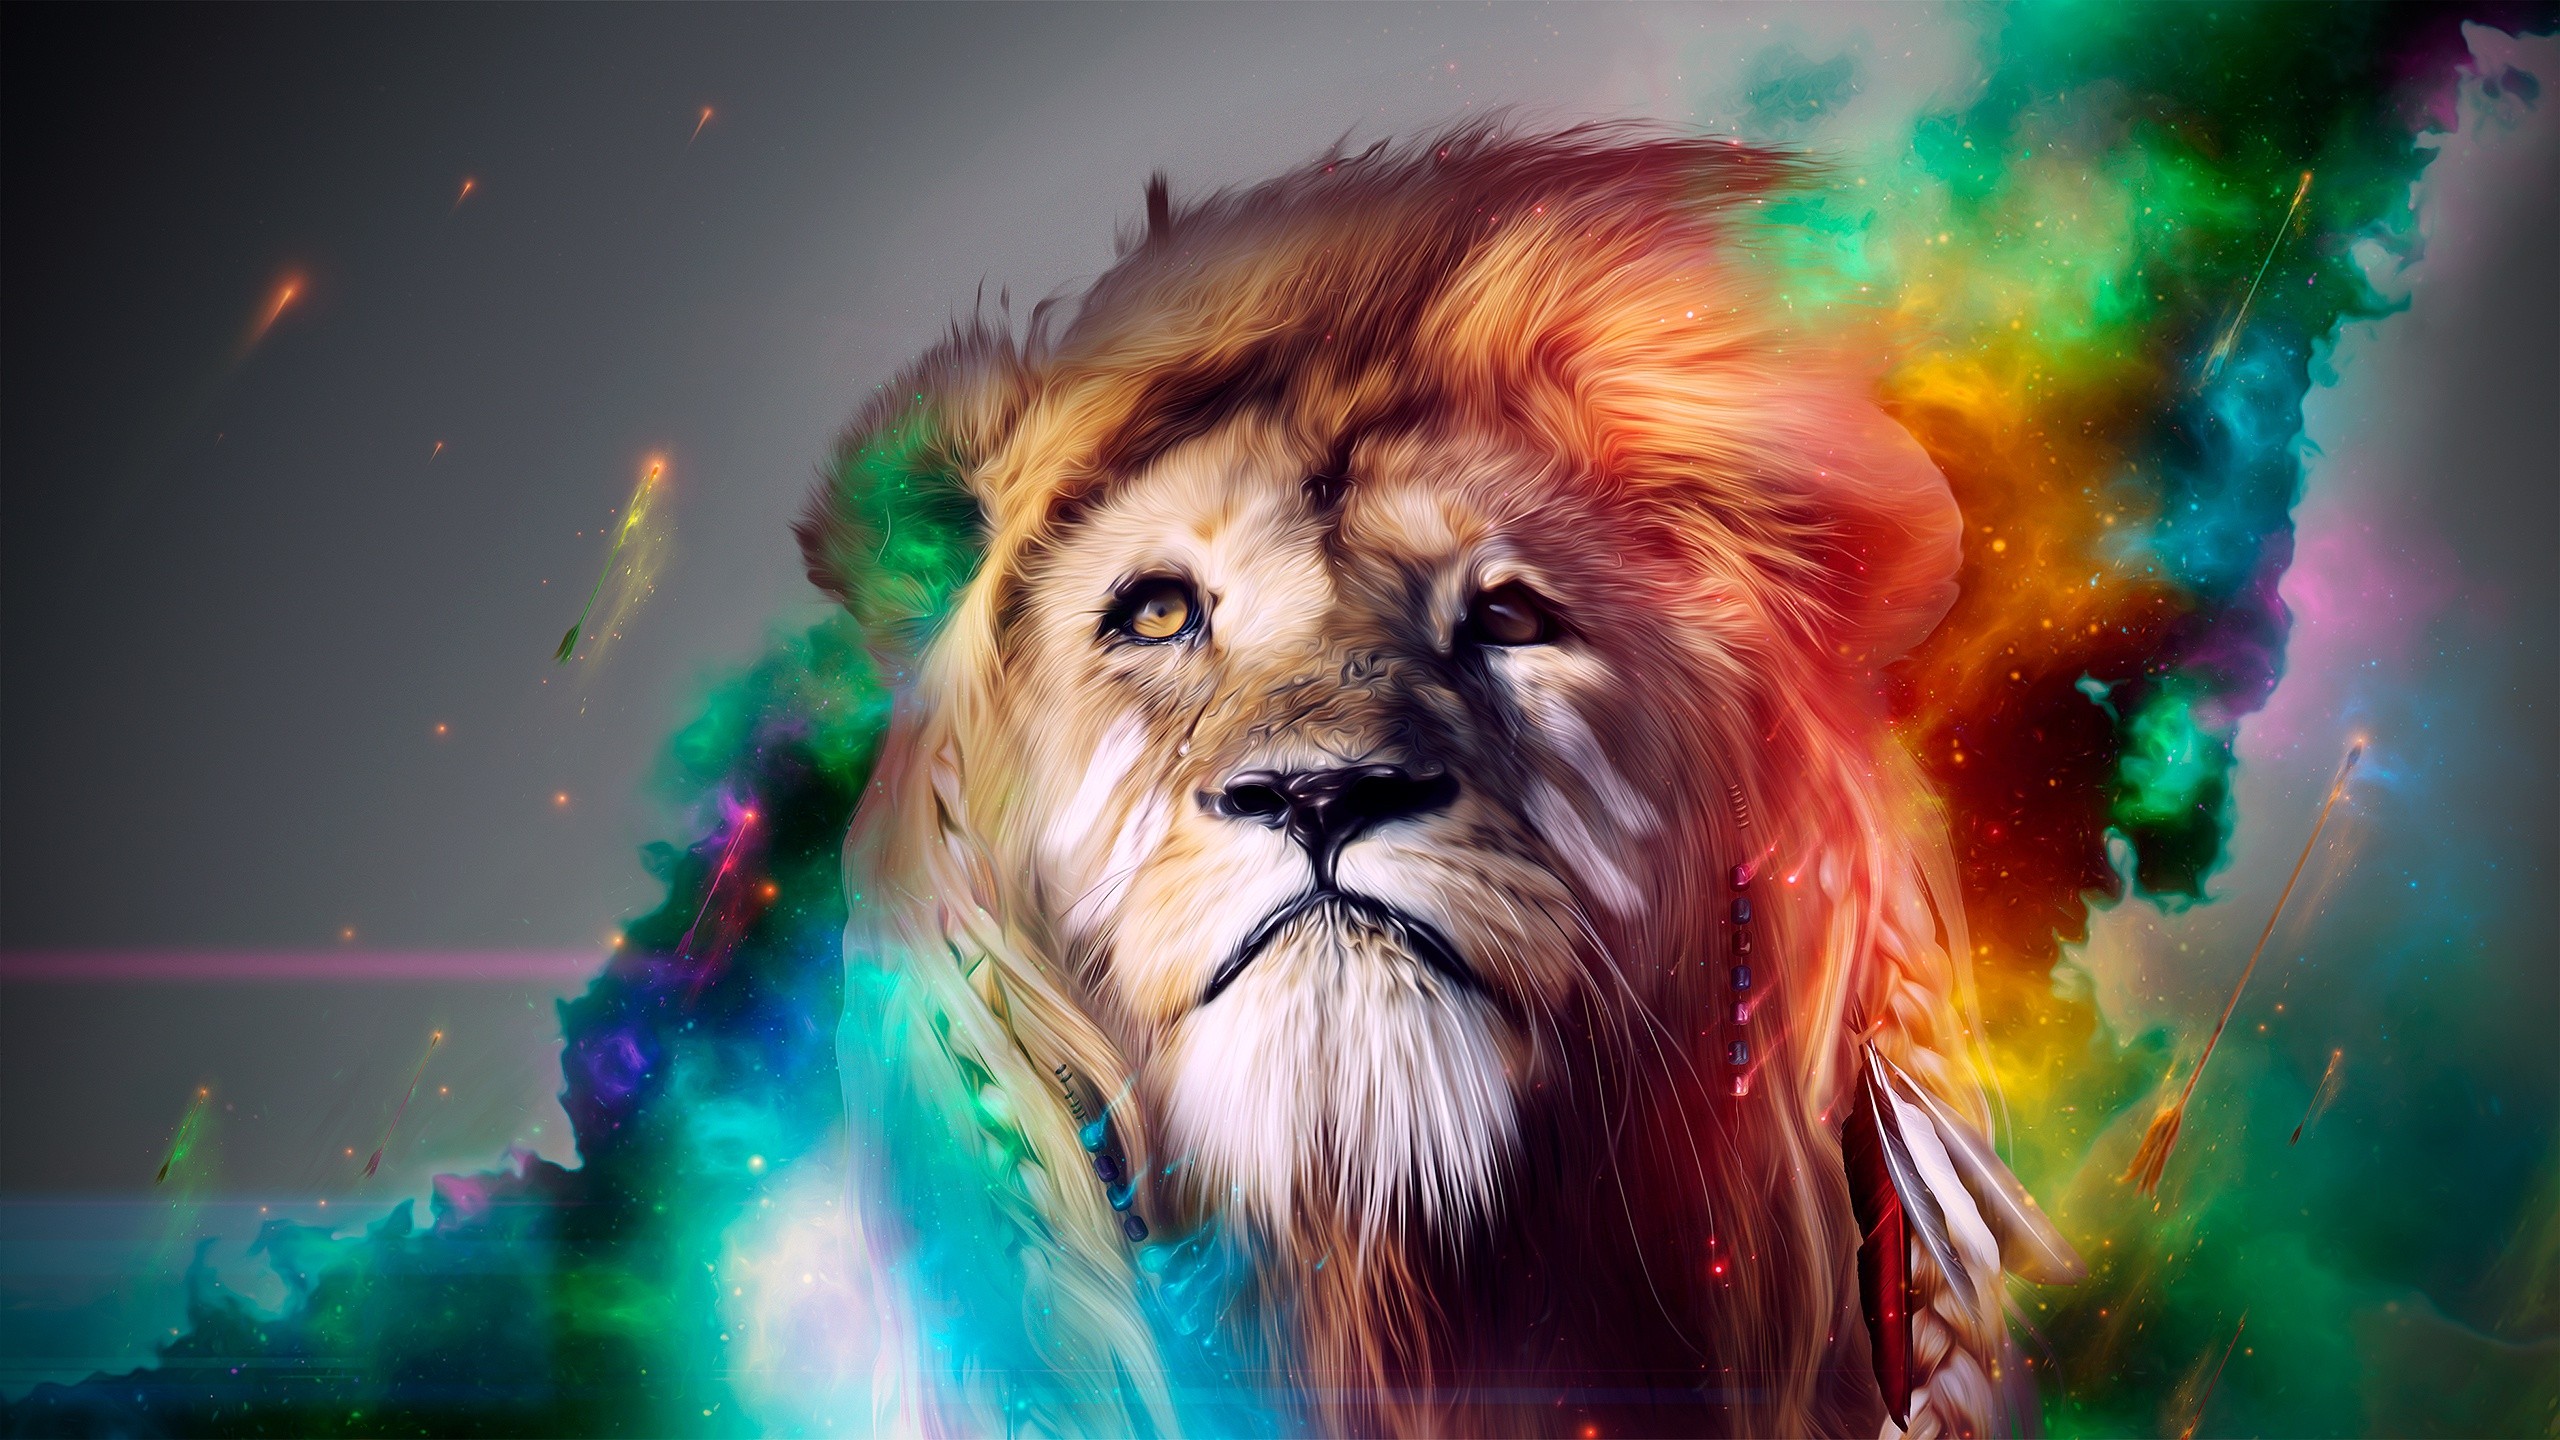 Lion Background Wallpaper 2560x1440 13646